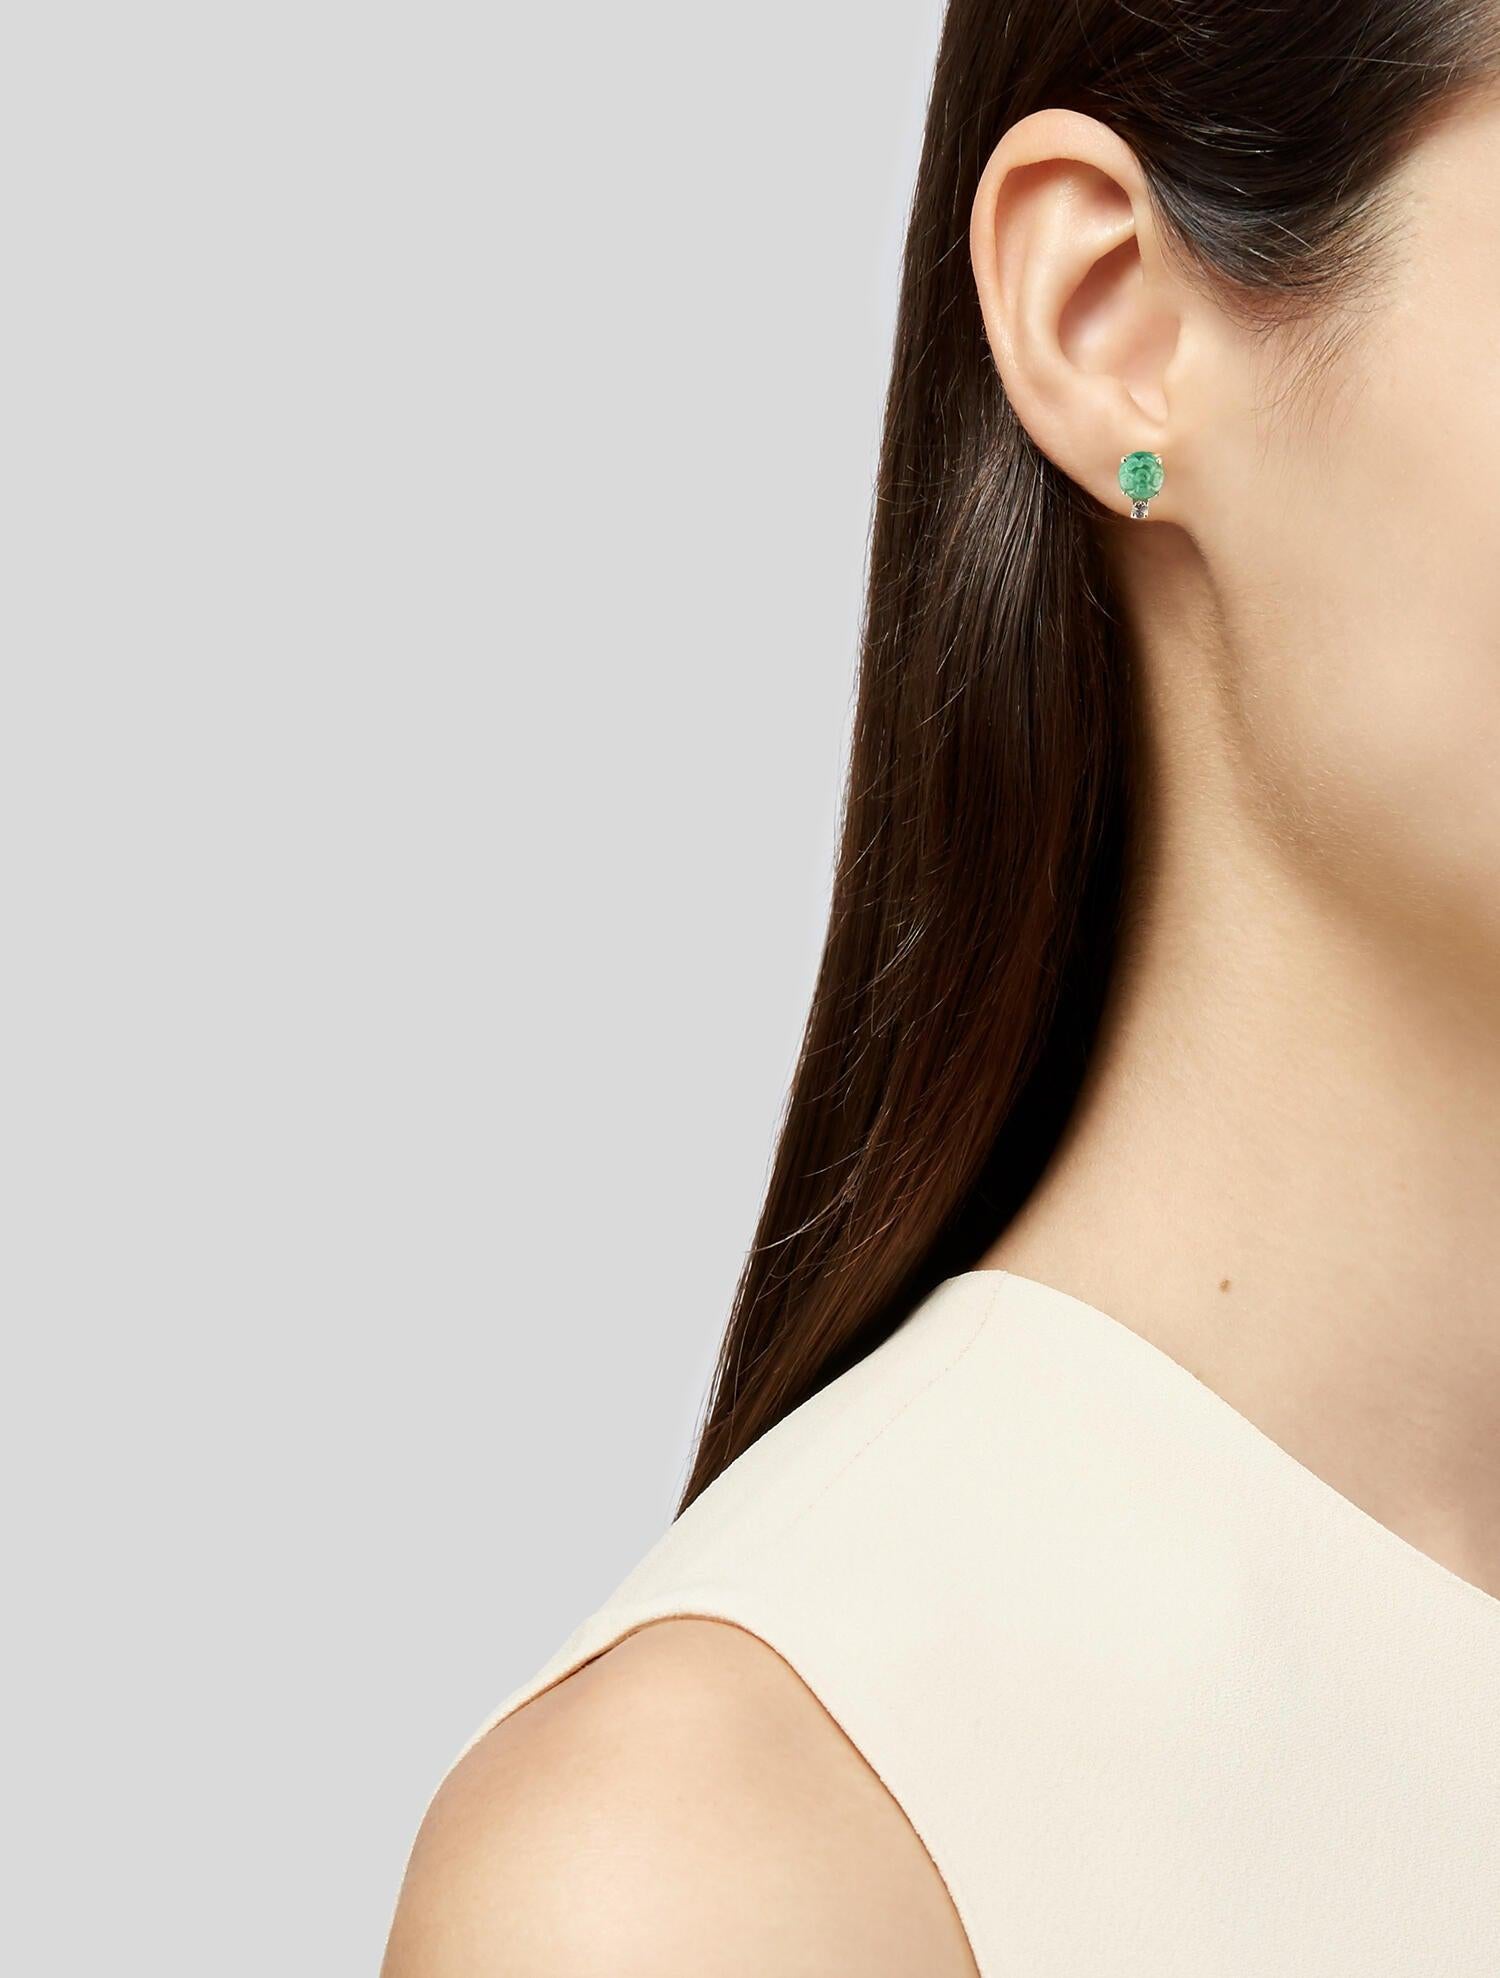 Stunning 14K Emerald & Diamond Stud Earrings - Classic Elegance Jewelry For Sale 1